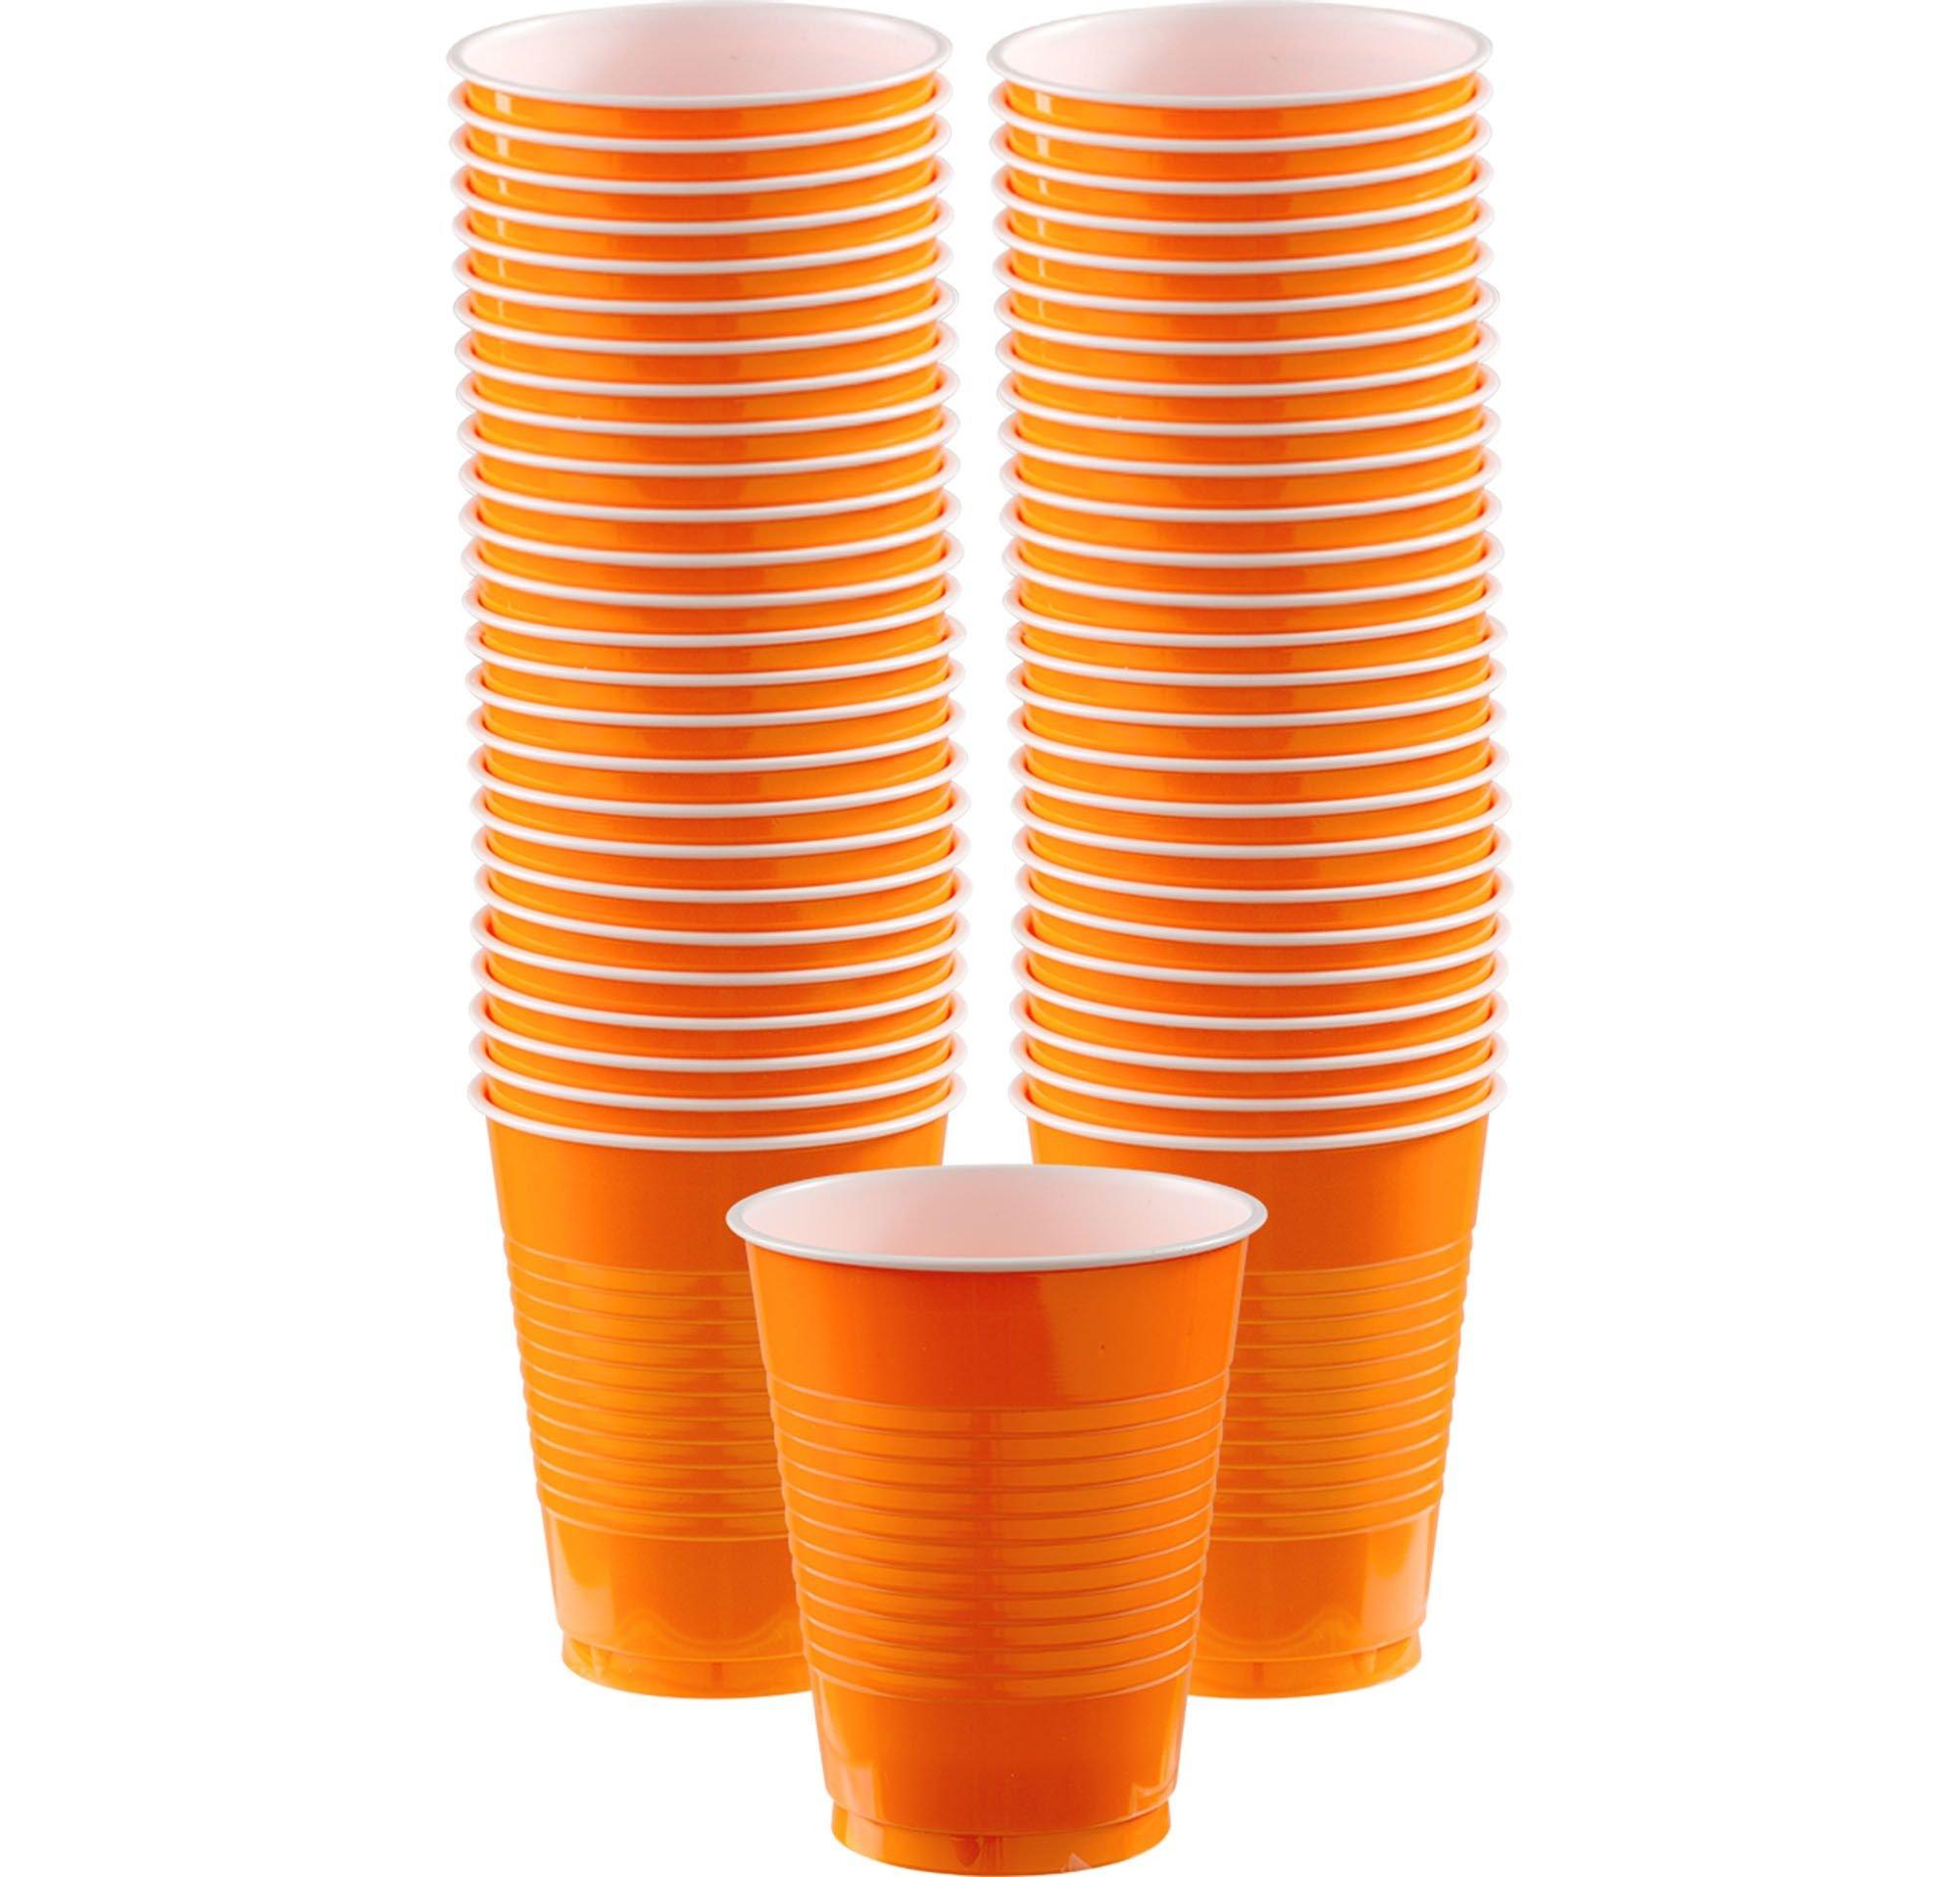 Amscan Big Party Pack 16 oz. Plastic Cups, Orange - 50 count